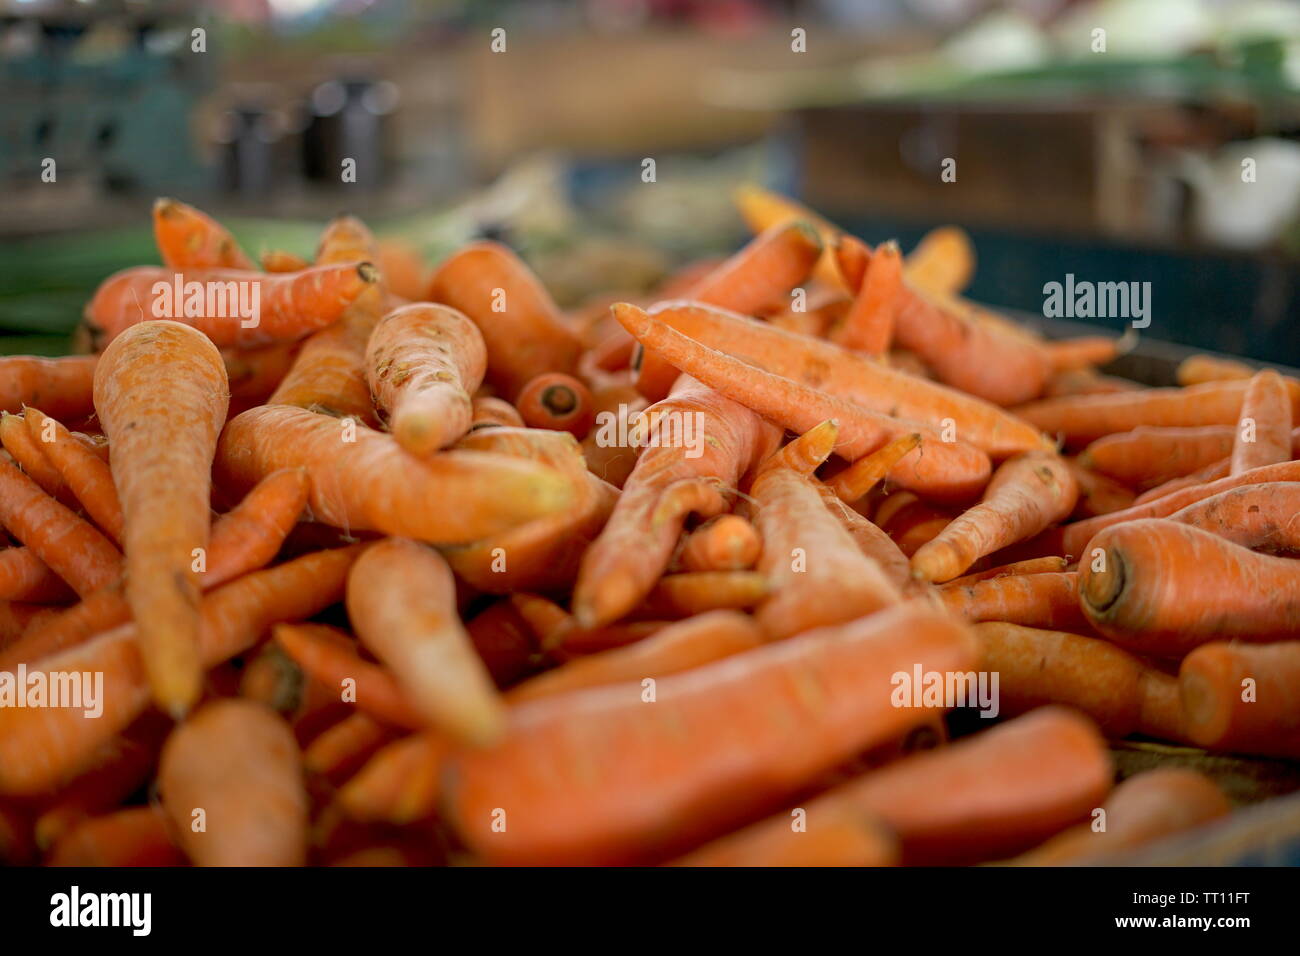 Pile of Fresh Carrots at vegetable market Stock Photo